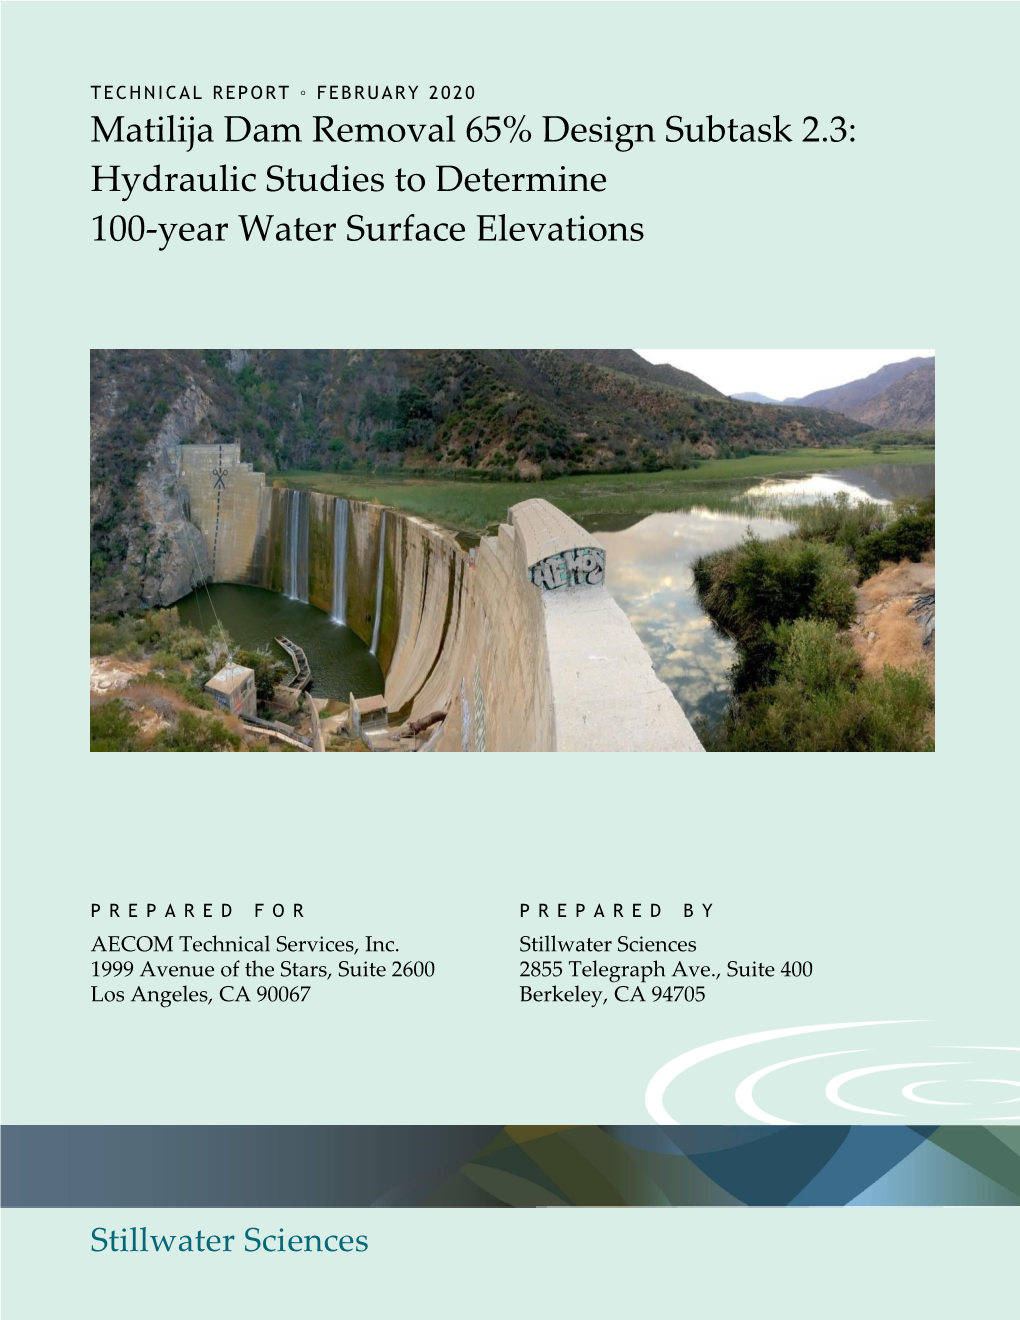 Matilija Dam Removal 65% Design Subtask 2.3: Hydraulic Studies to Determine 100-Year Water Surface Elevations